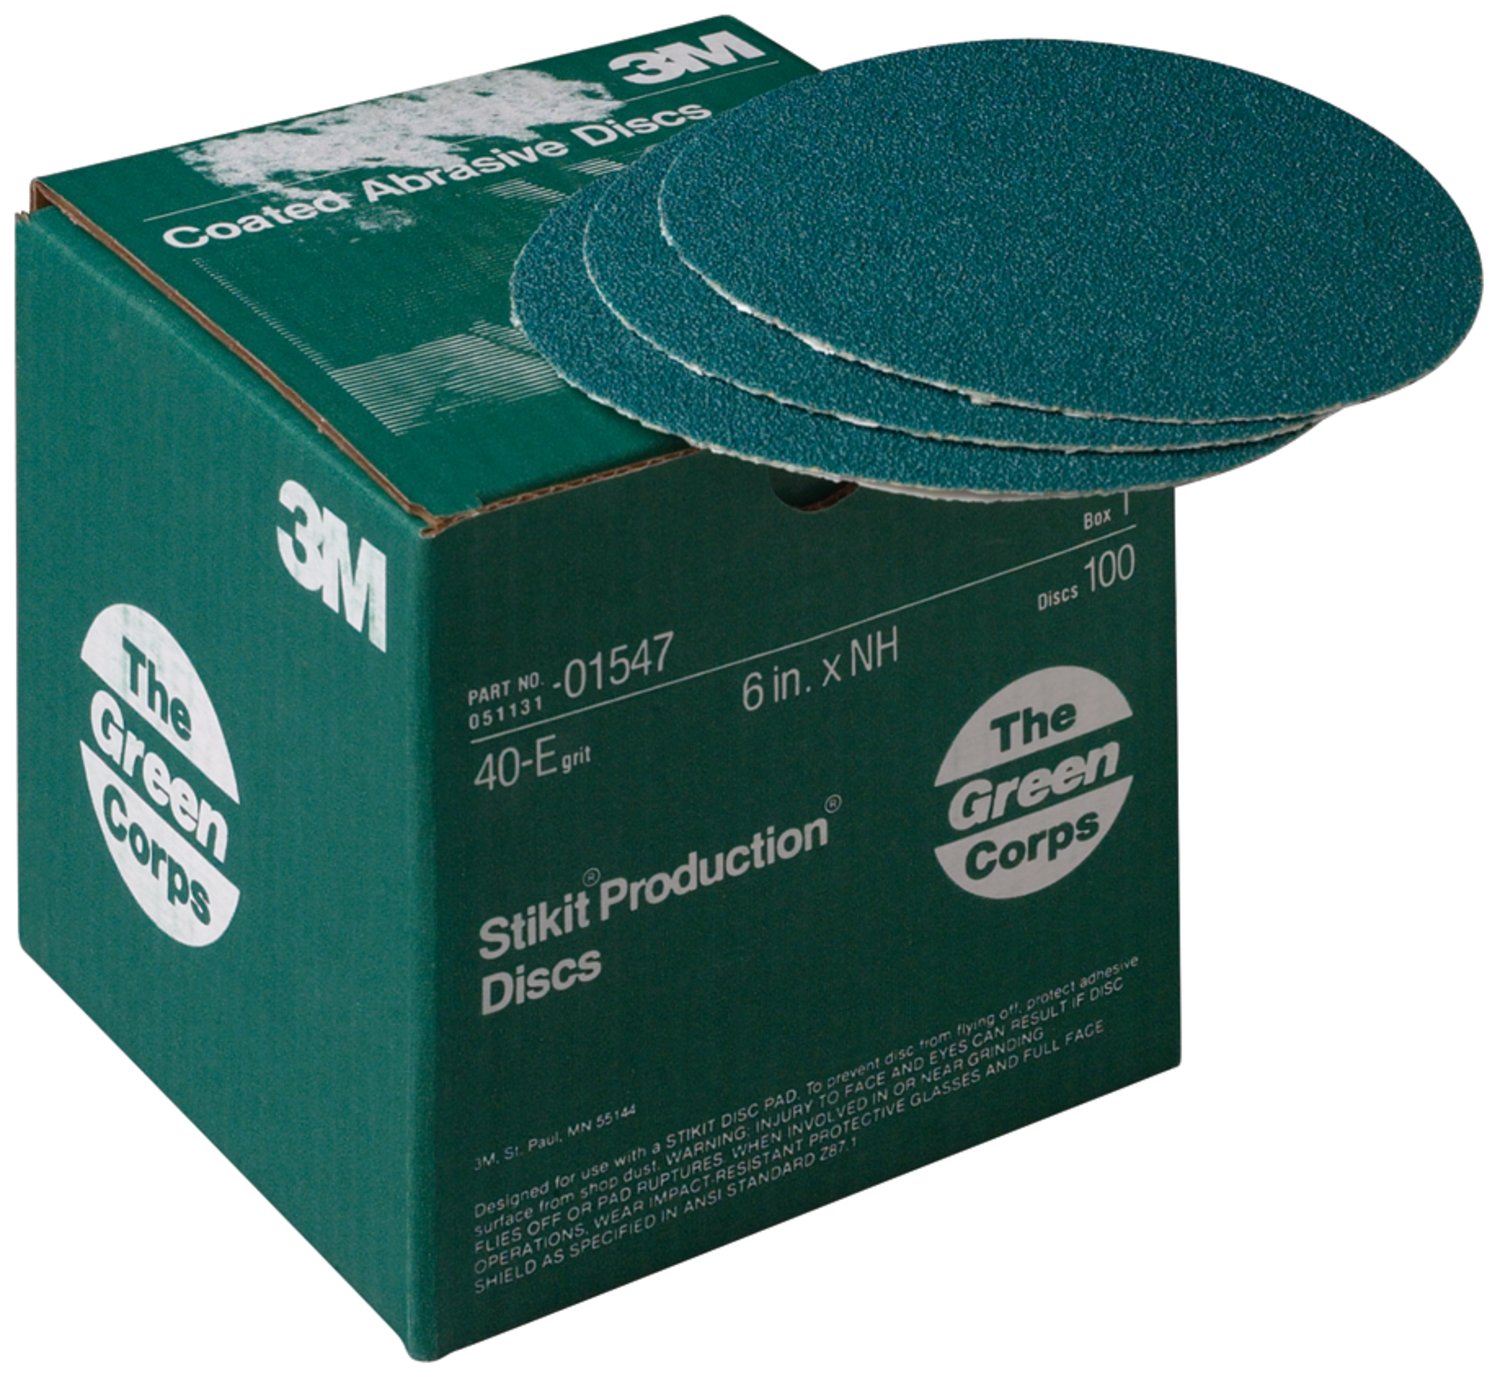 7000120327 - 3M Green Corps Stikit Production Disc, 01547, 6 in, 40 grit, 100
discs per carton, 5 cartons per case